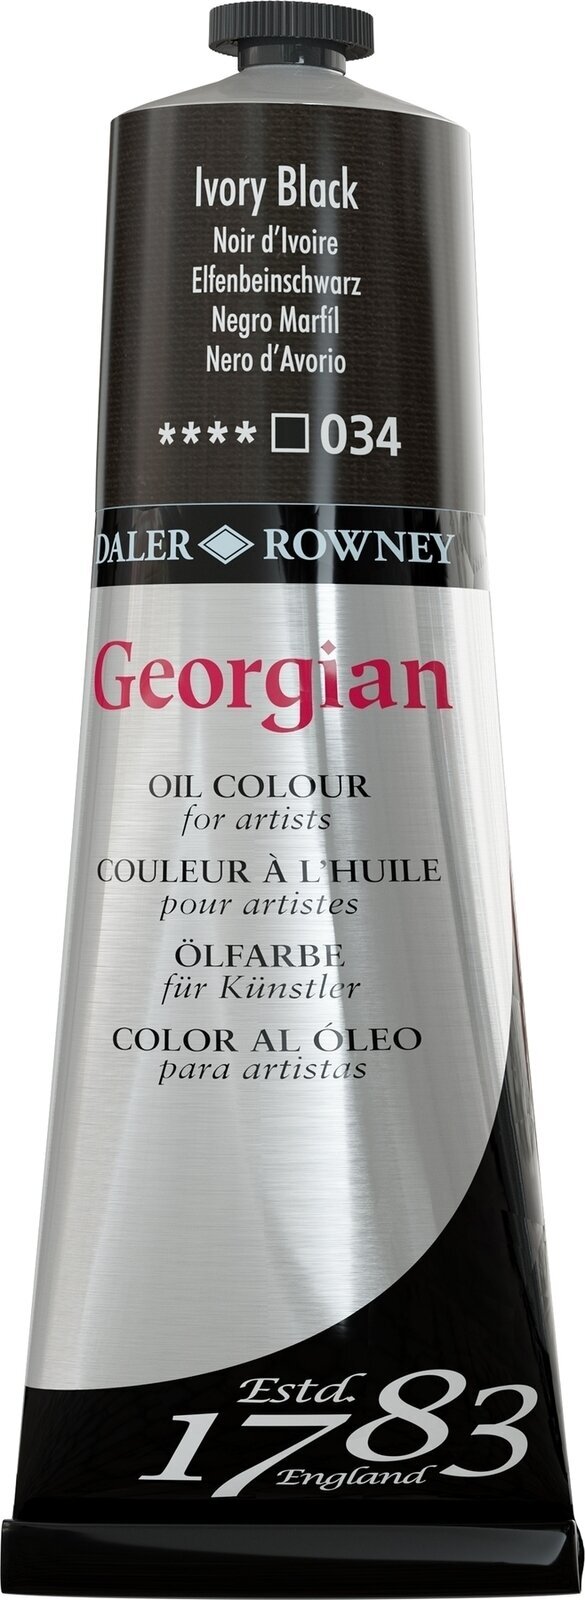 Oil colour Daler Rowney Georgian Oil Paint Ivory Black 225 ml 1 pc